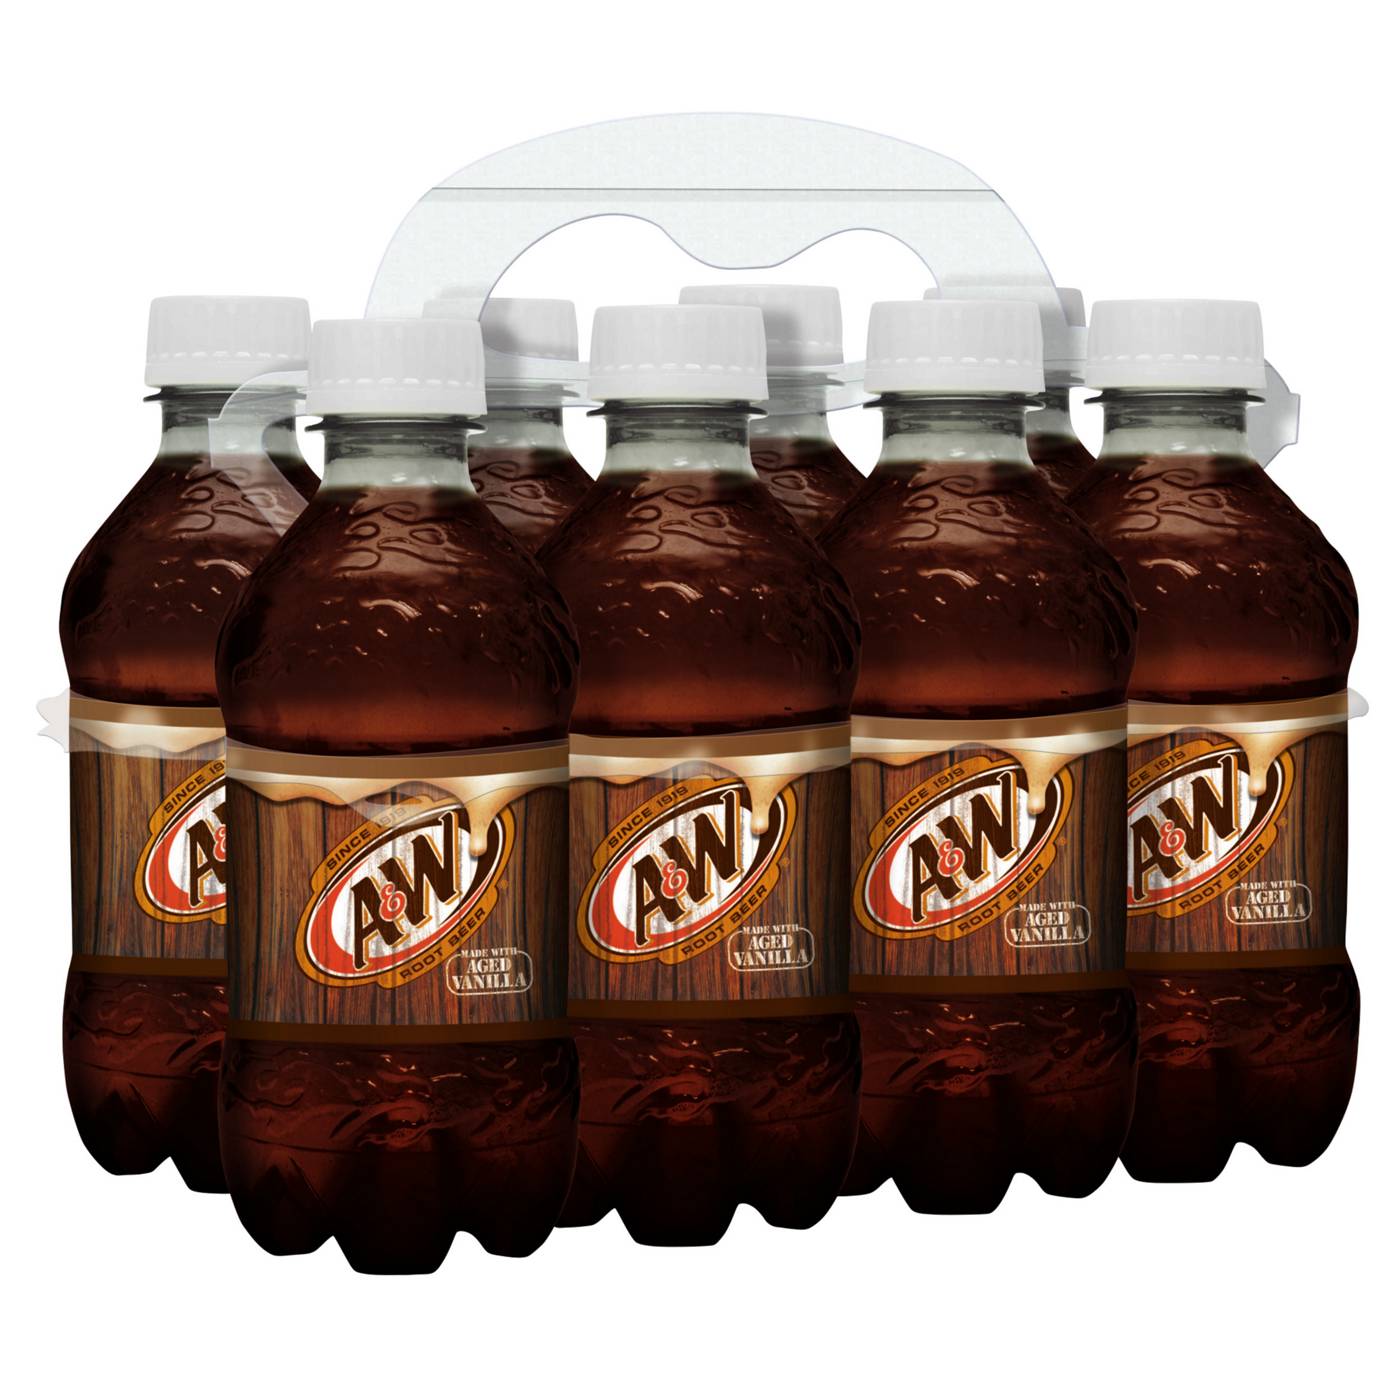 A&W Root Beer 12 oz Bottles; image 1 of 2